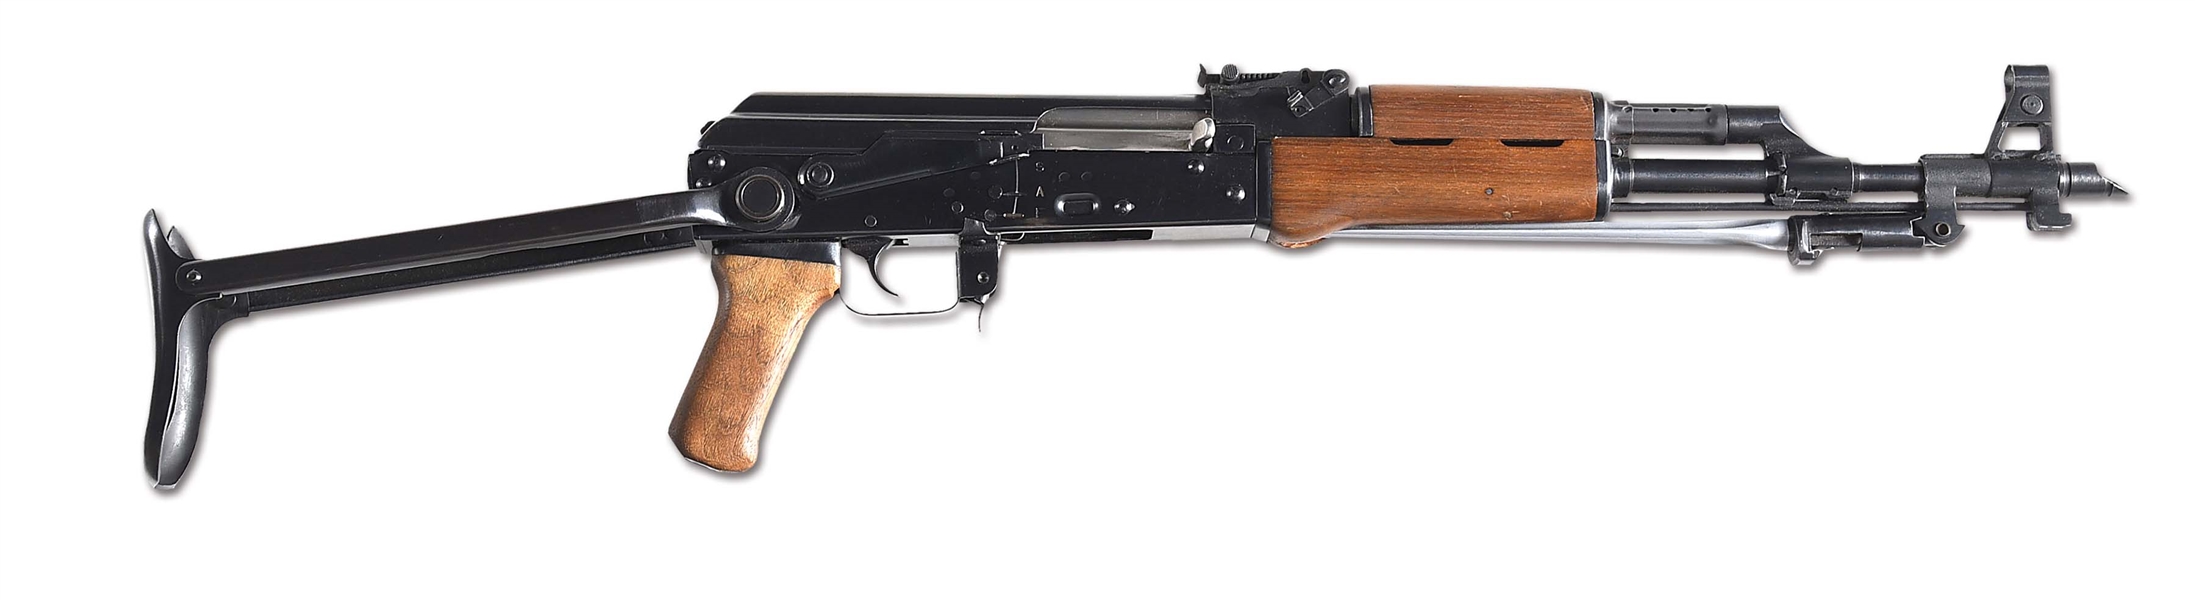 (N) POLYTECH AK47S HOST GUN WITH QUALIFIED MFG AUTO SEAR MACHINE GUN (FULLY TRANSFERABLE).